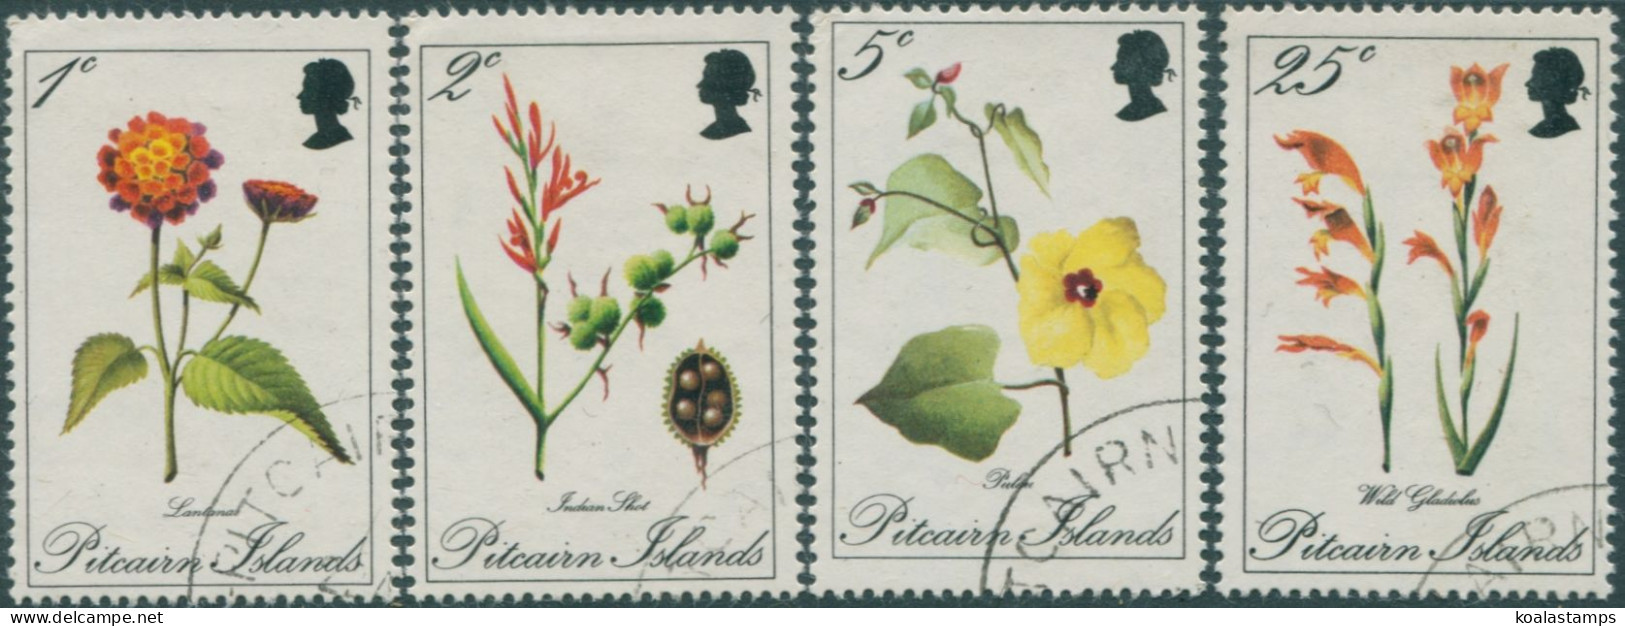 Pitcairn Islands 1970 SG107-110 Flowers Set FU - Pitcairn